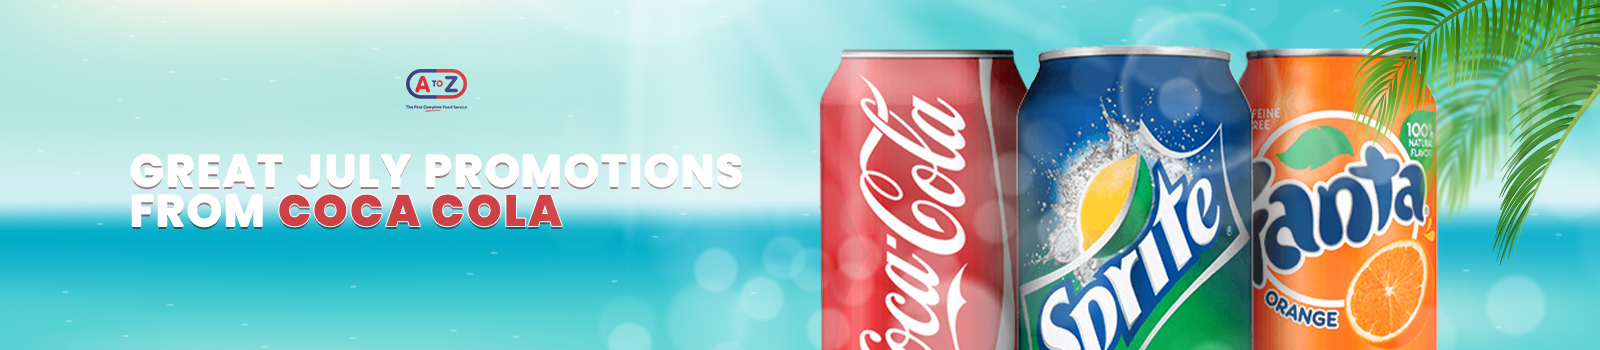 Coca Cola Banner July